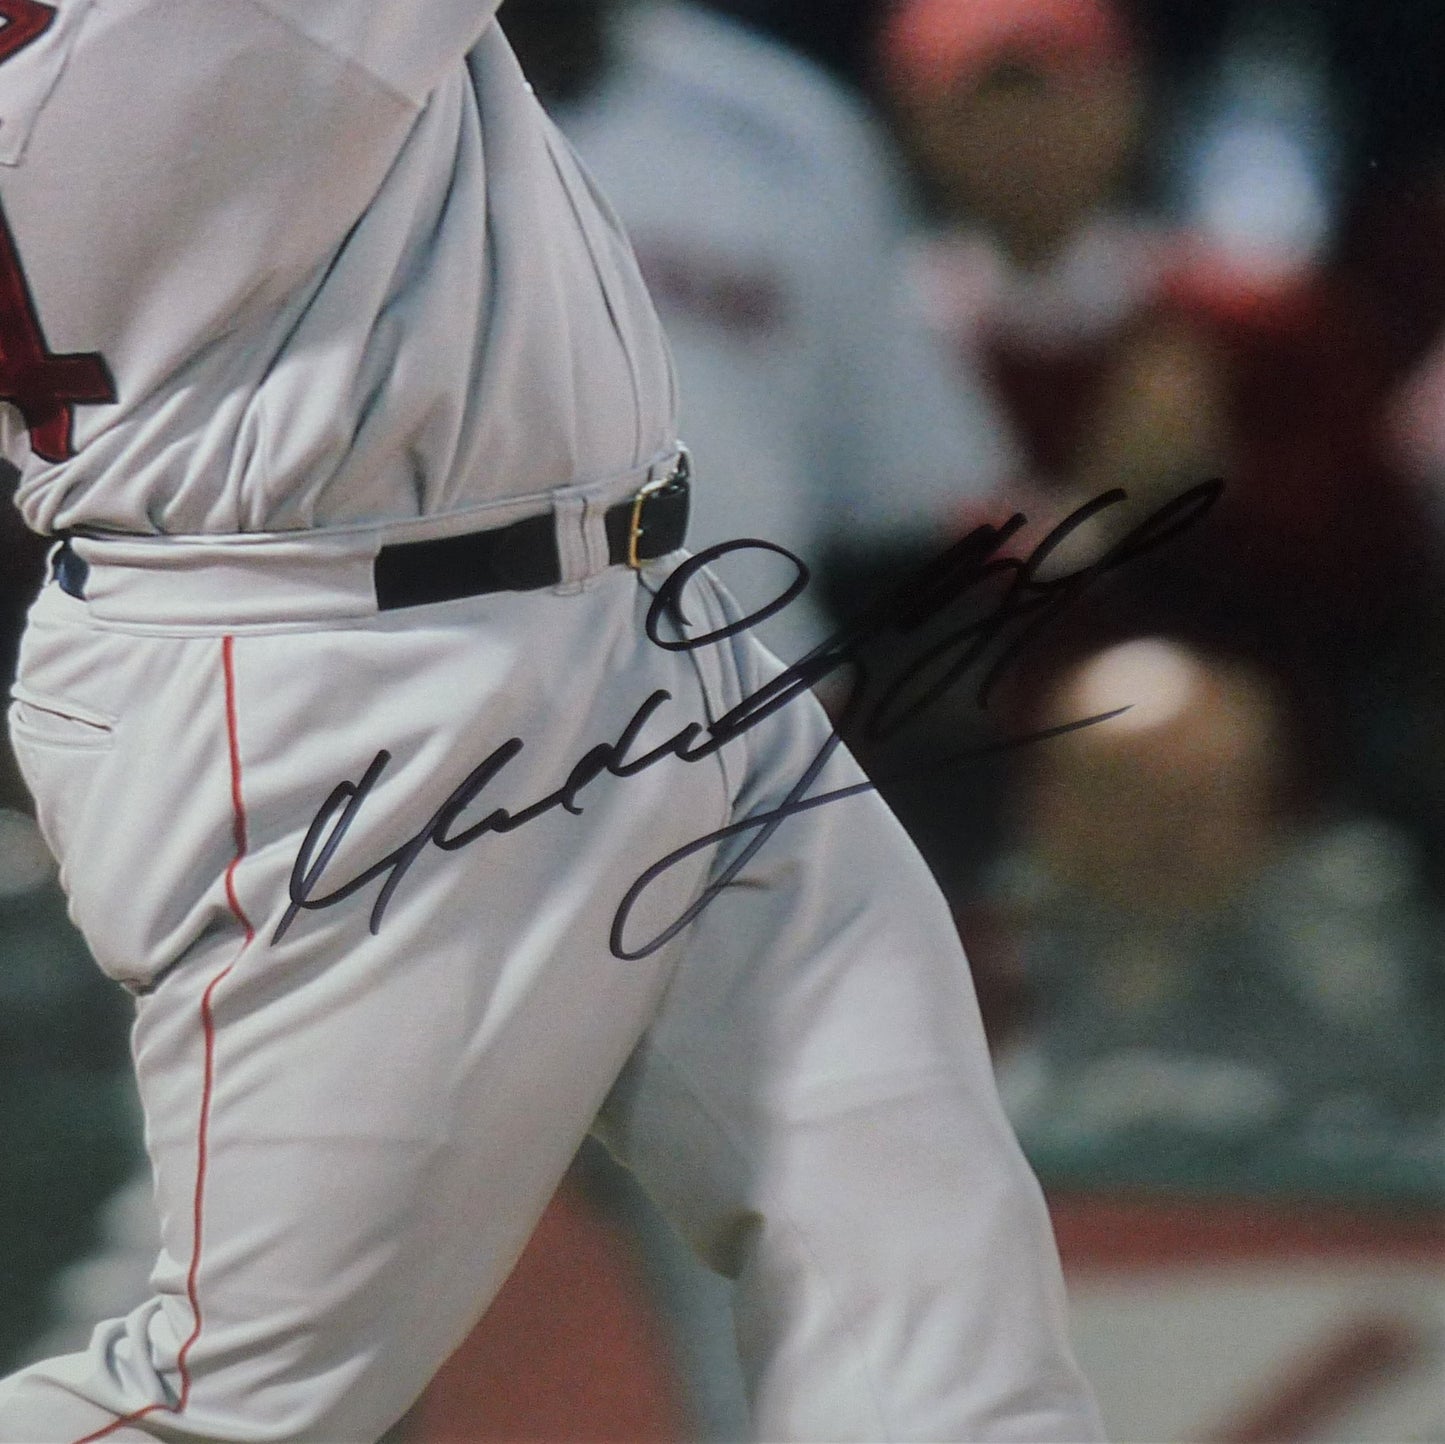 Manny Ramirez Autographed Boston Red Sox Framed 16x20 Photo - JSA